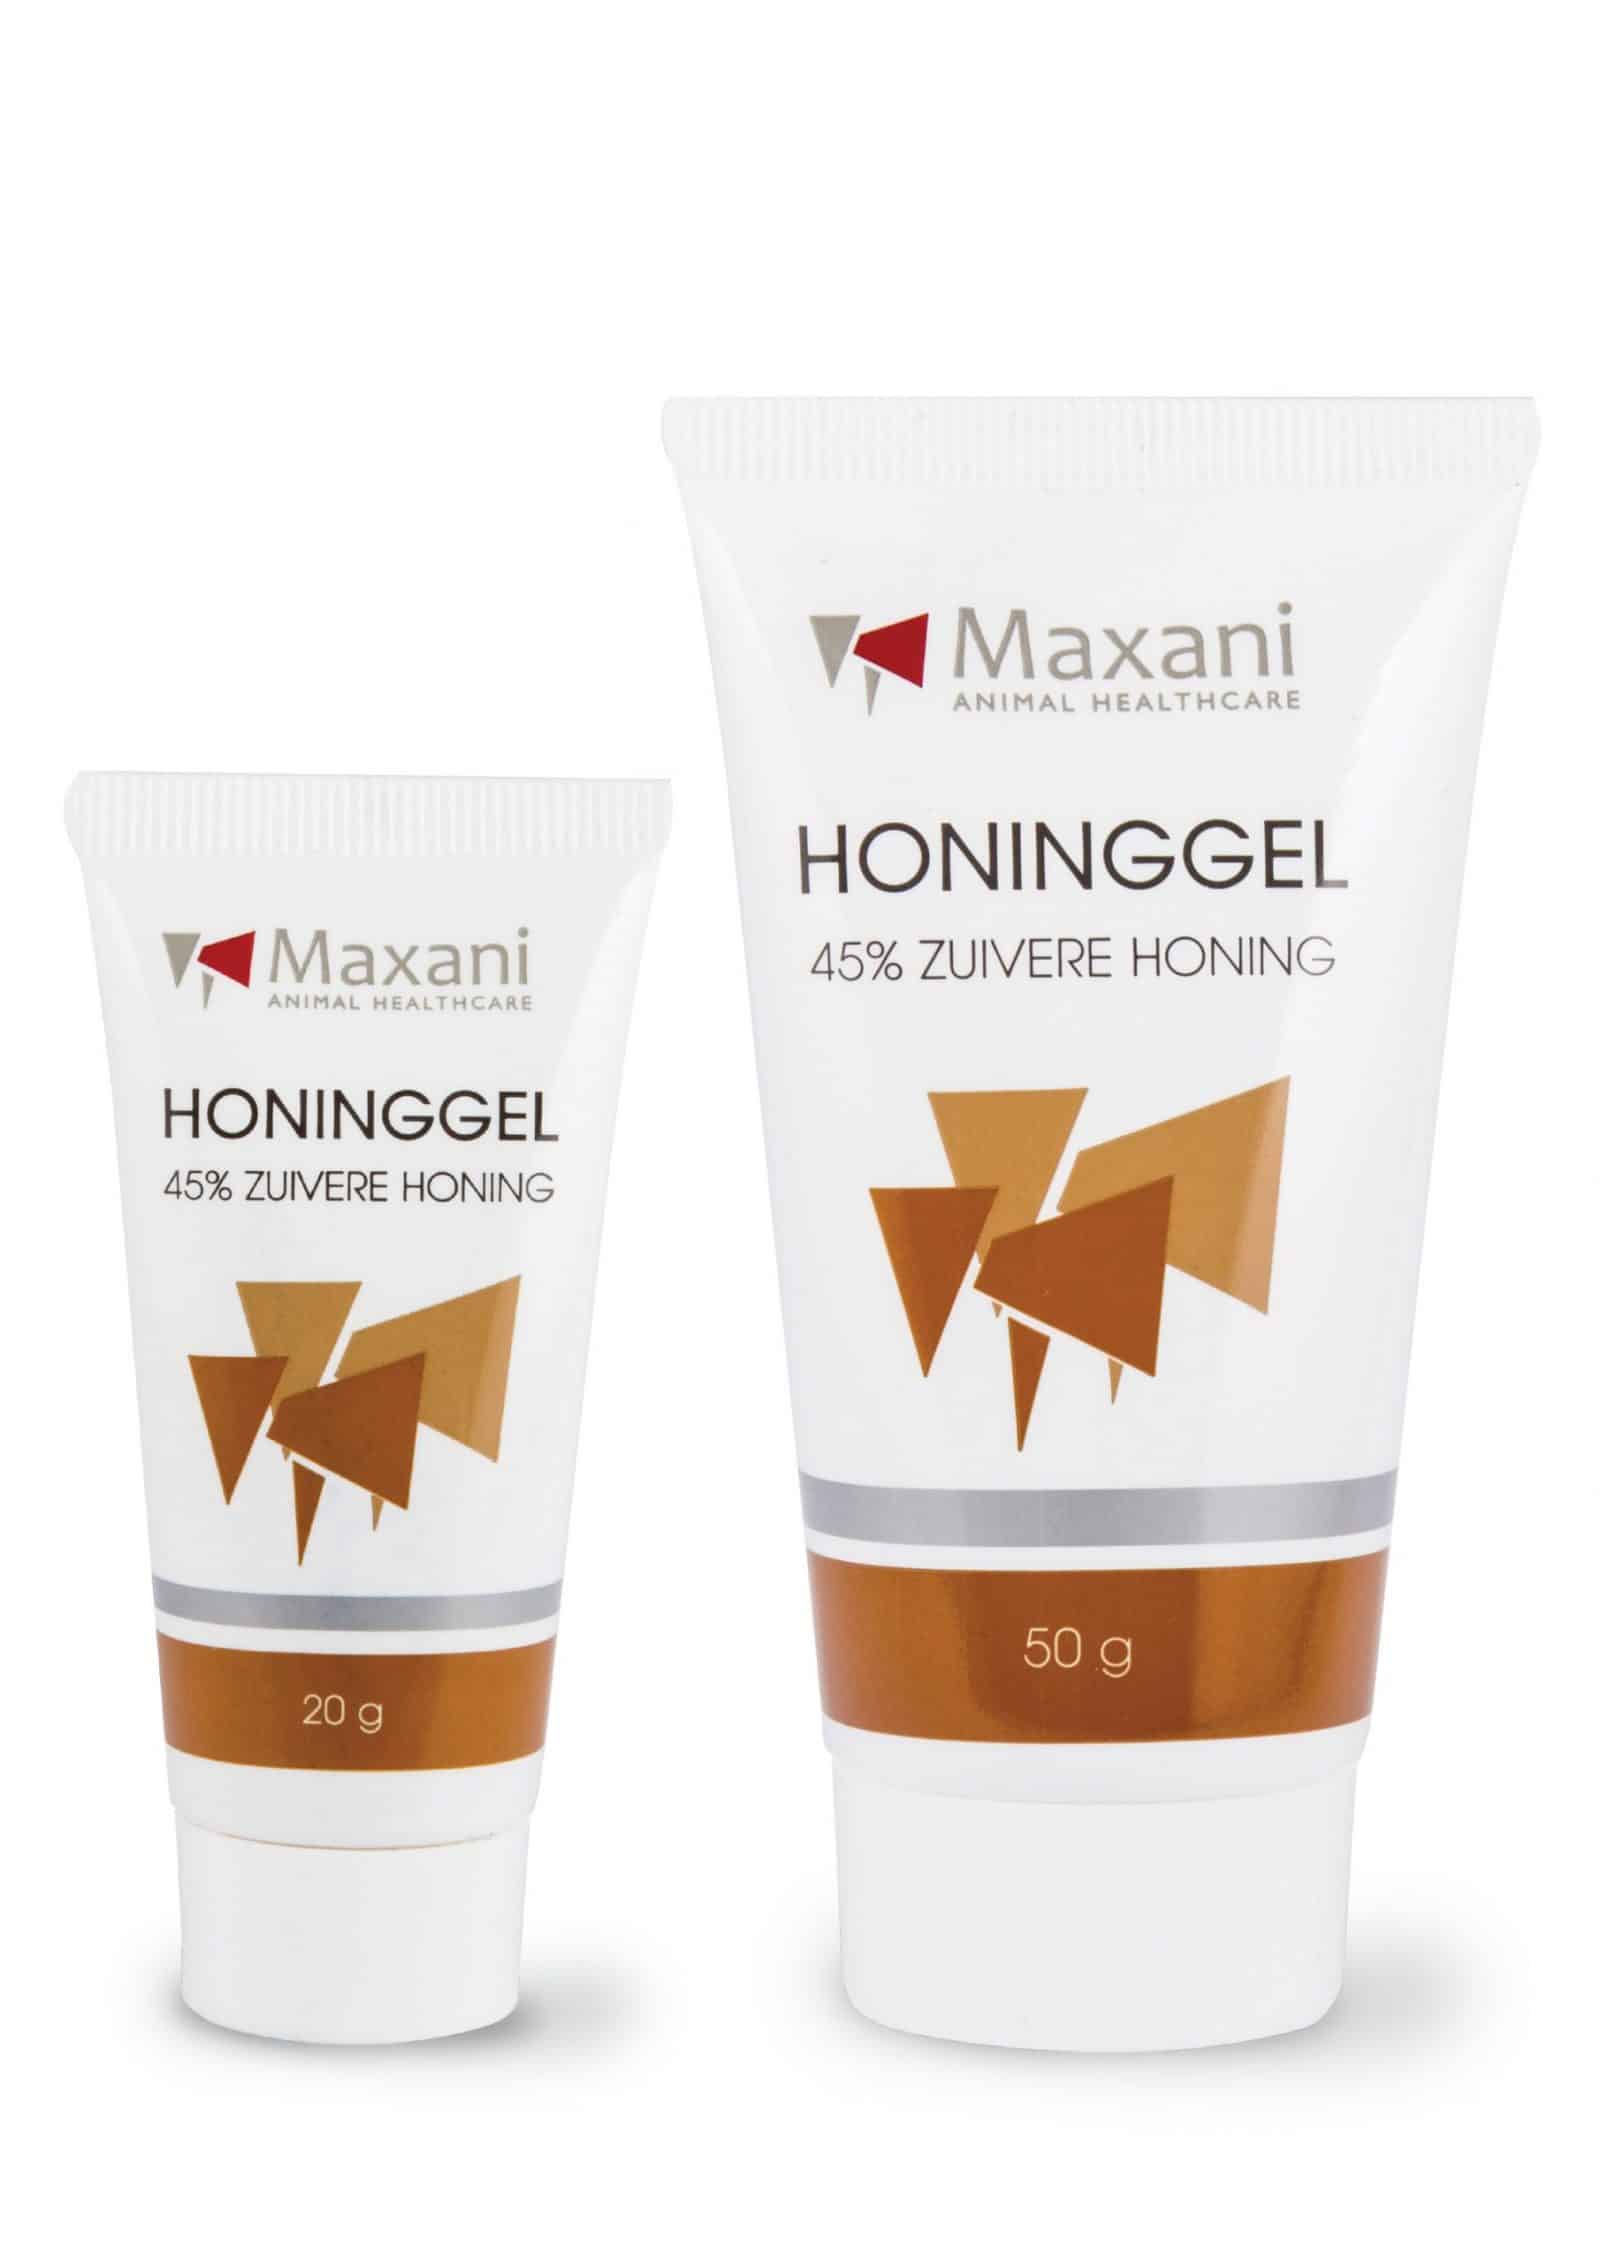 Maxani Honiggel-1